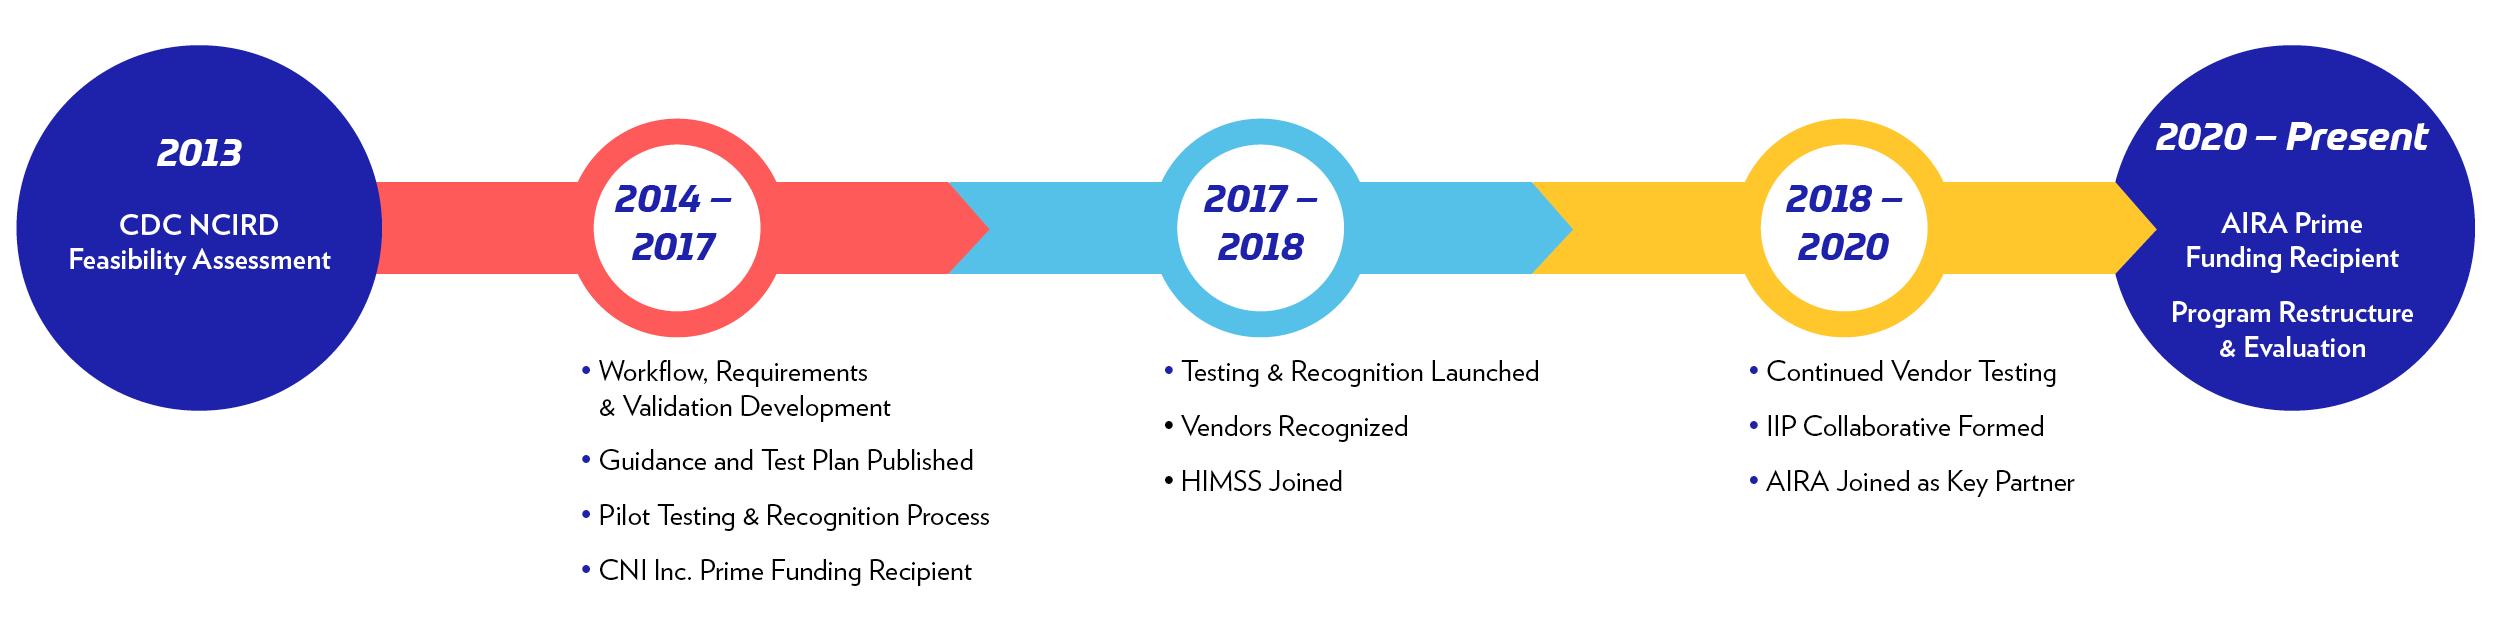 history of the IIP program, 2013-current